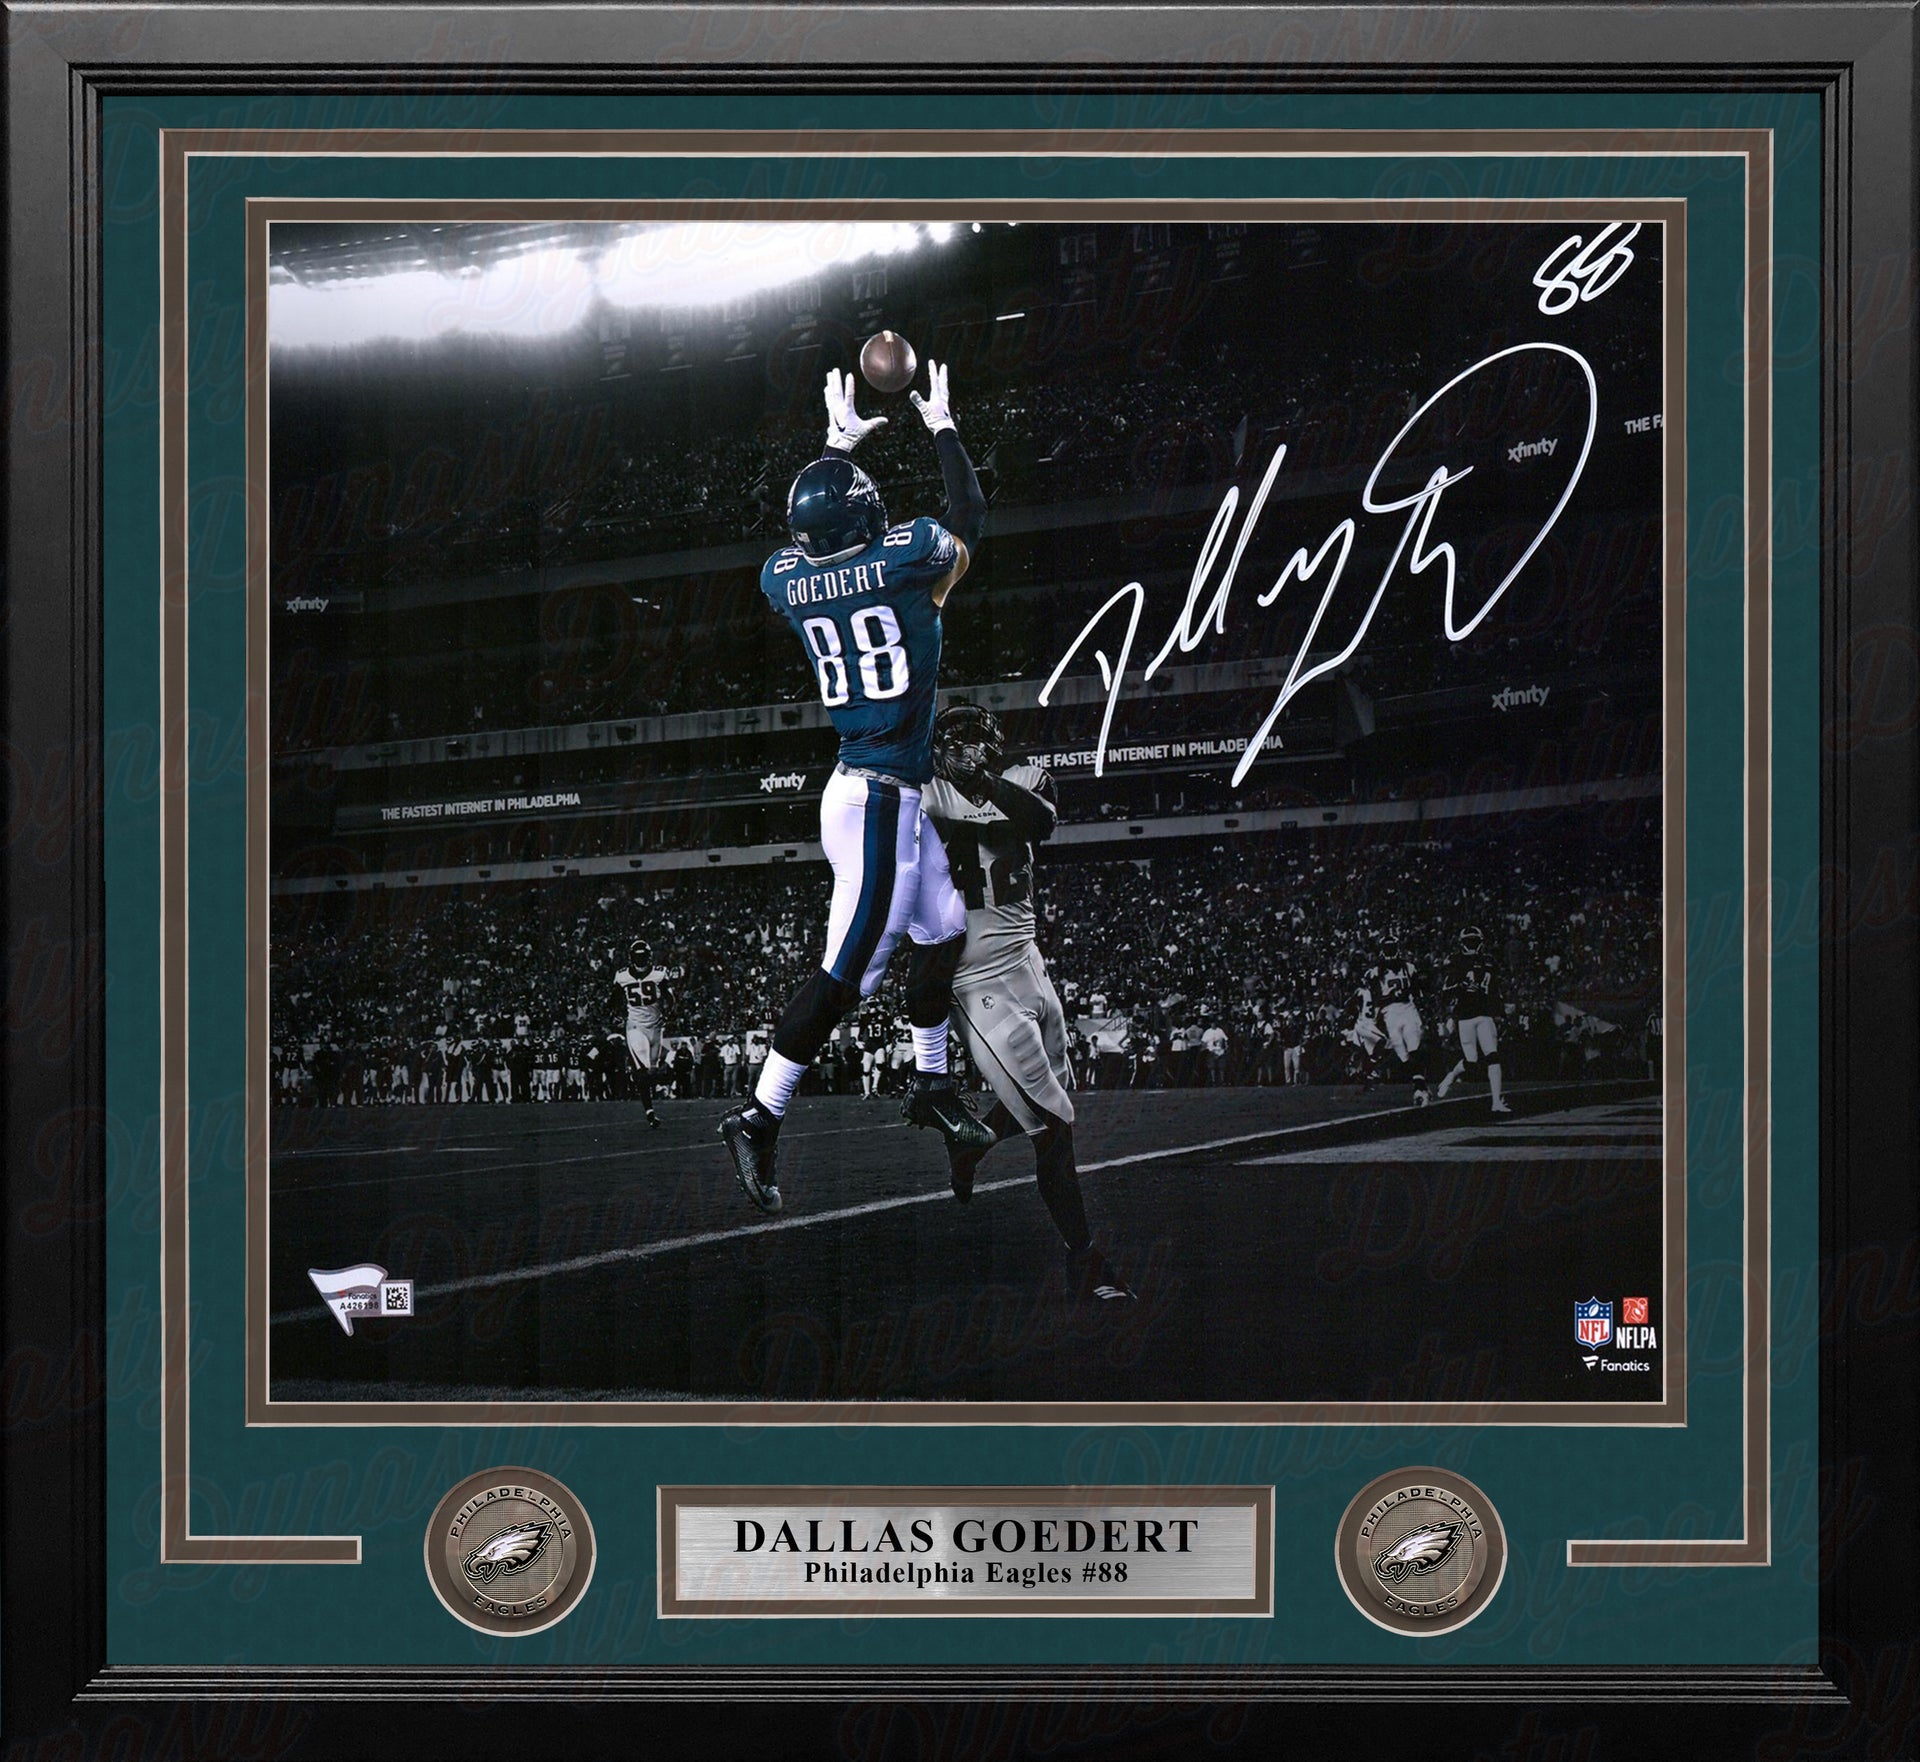 Dallas Goedert Blackout Touchdown Philadelphia Eagles Autographed 11x14 Framed Football Photo - Dynasty Sports & Framing 